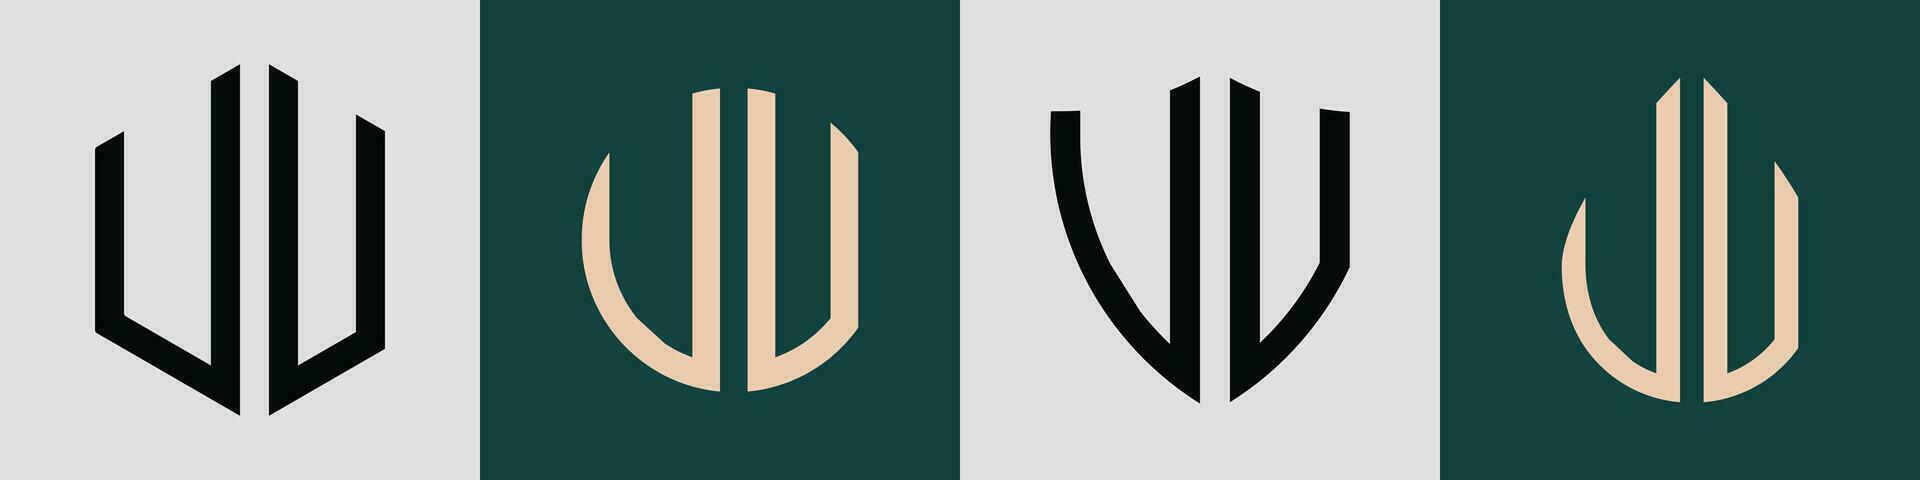 kreativ einfach Initiale Briefe uv Logo Designs bündeln. vektor